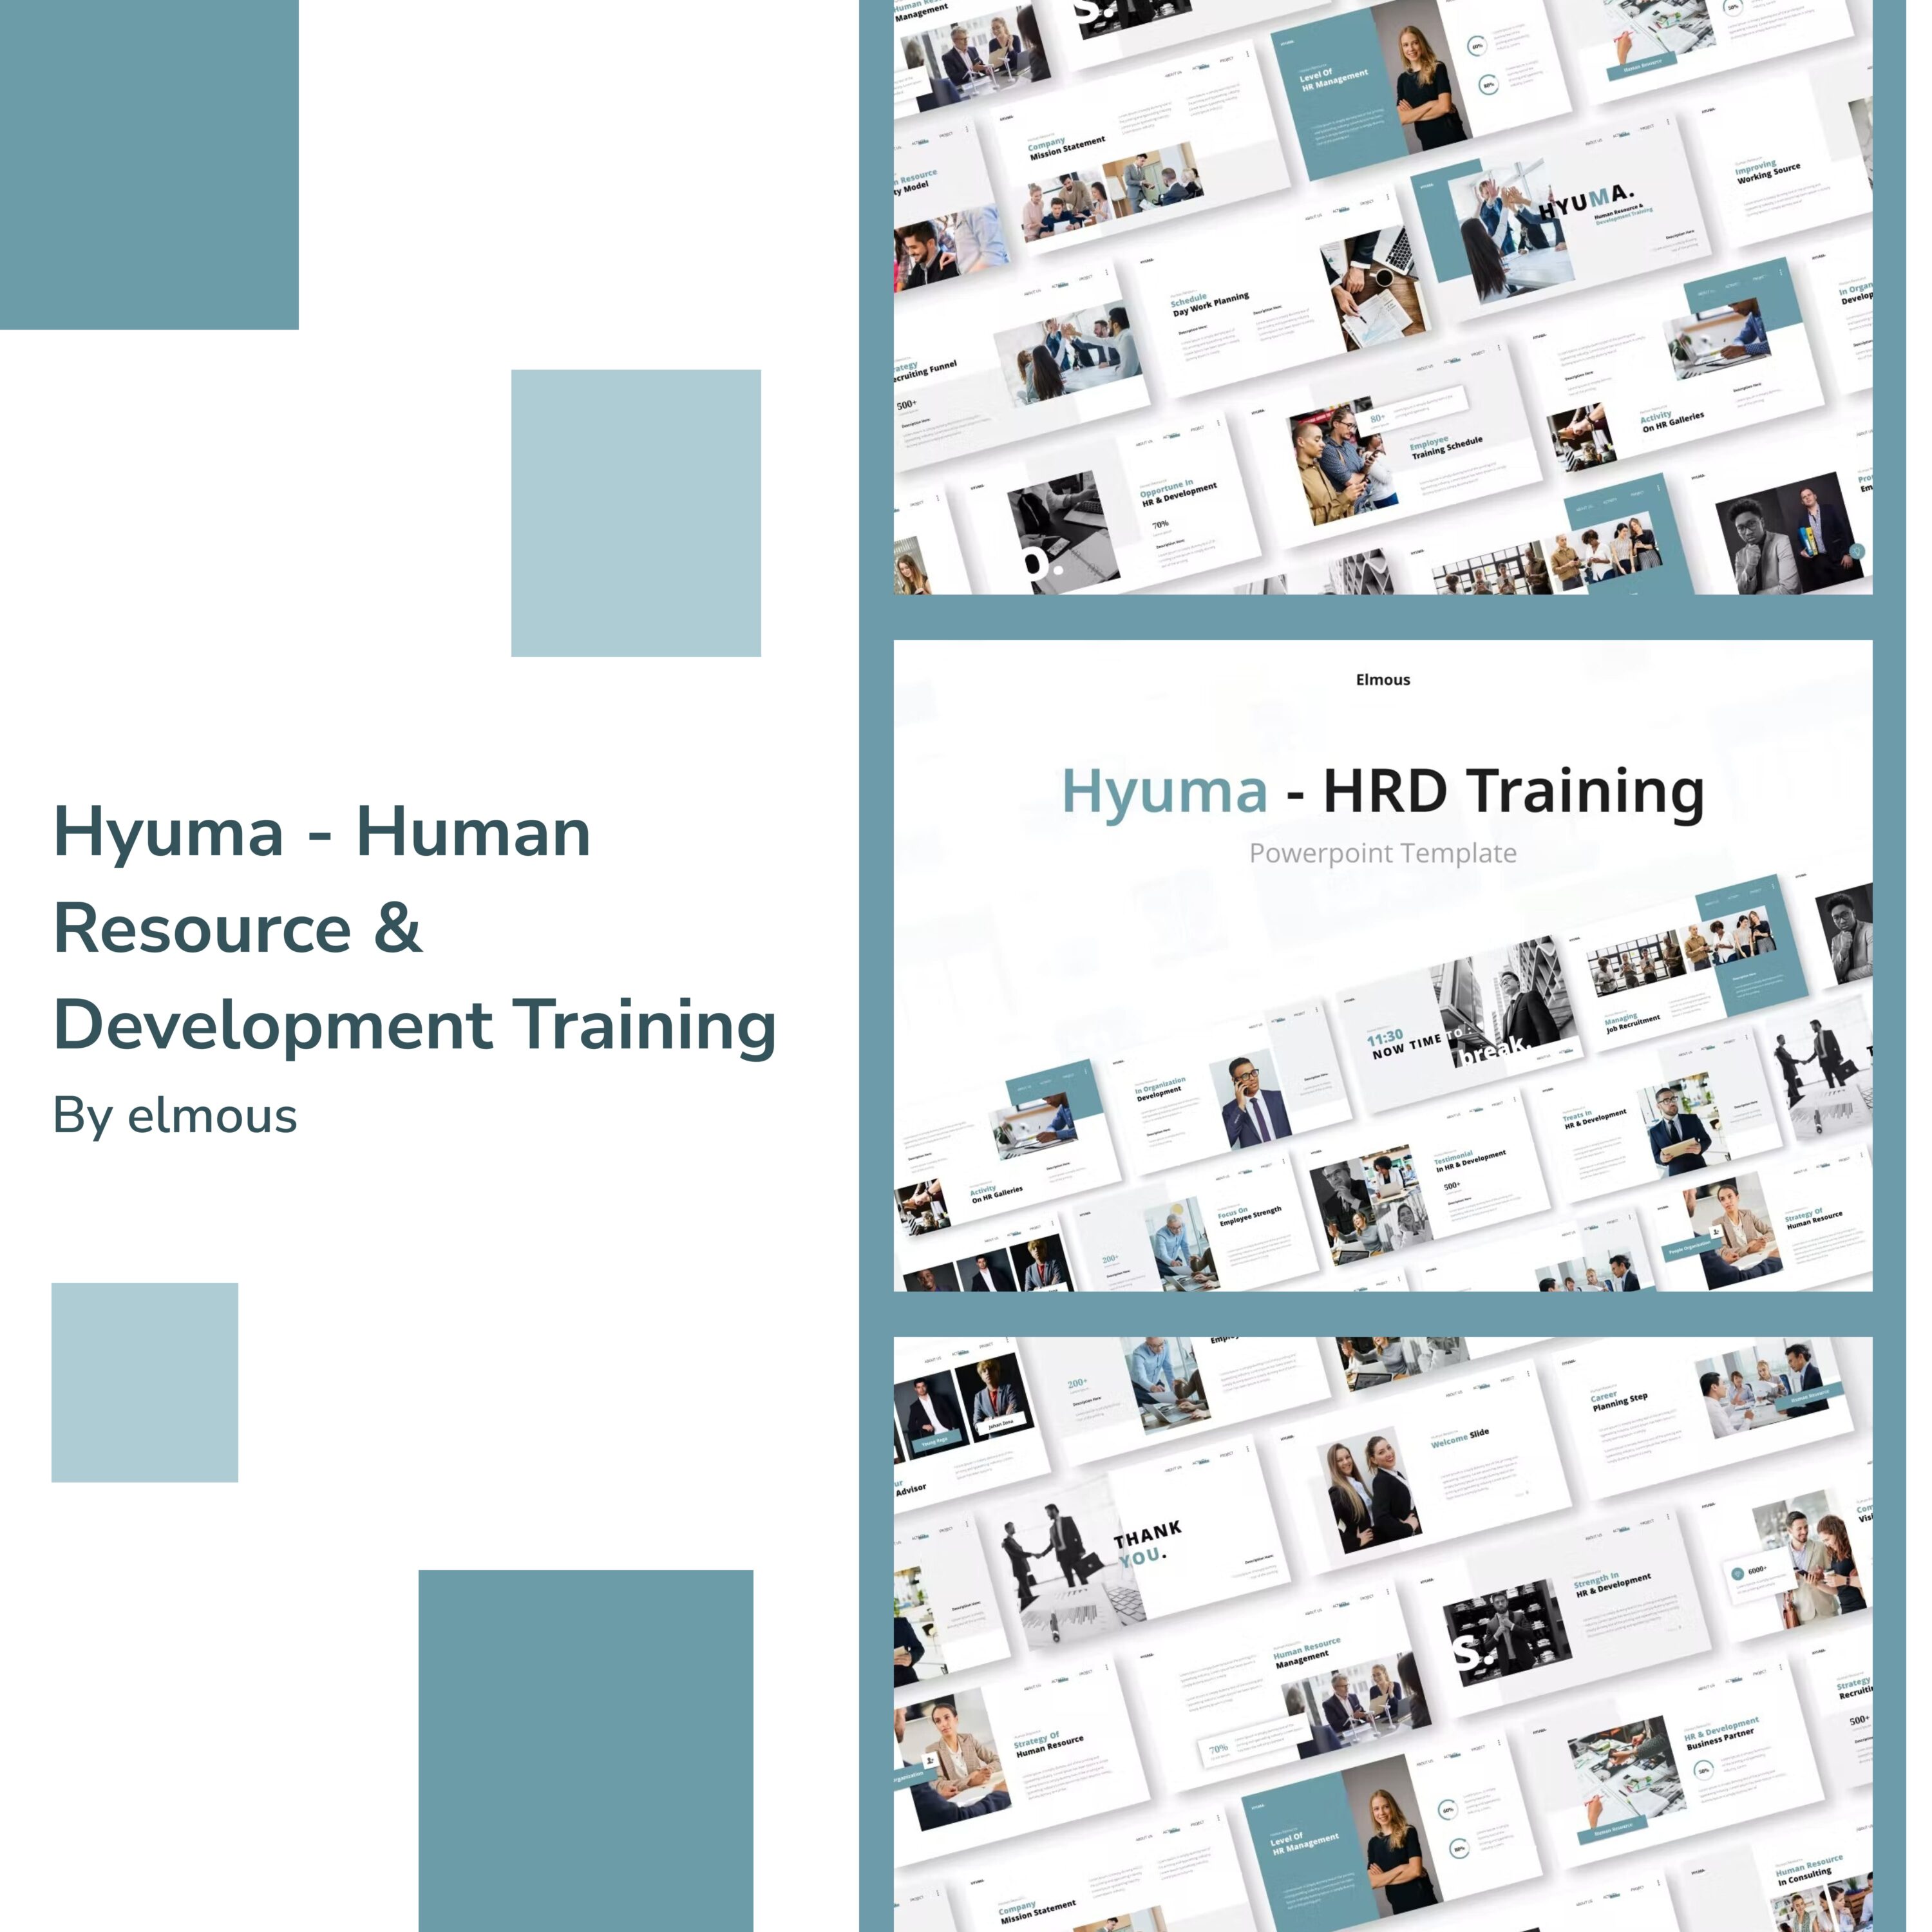 Hyuma - Human Resource & Development Training.